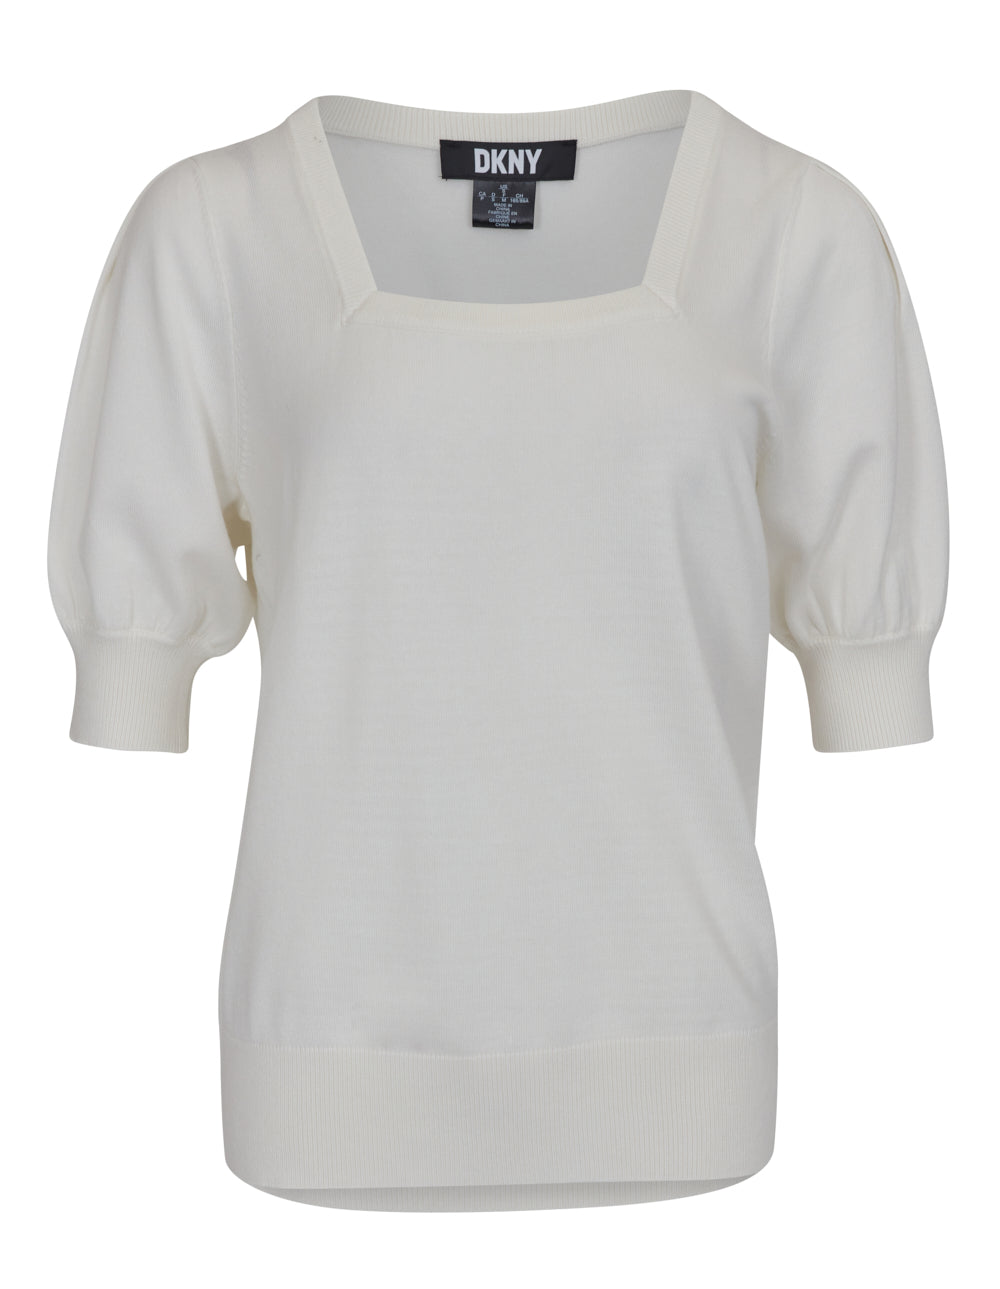 DKNY-Spun Rayon Nylon Sweater-Ivory-1